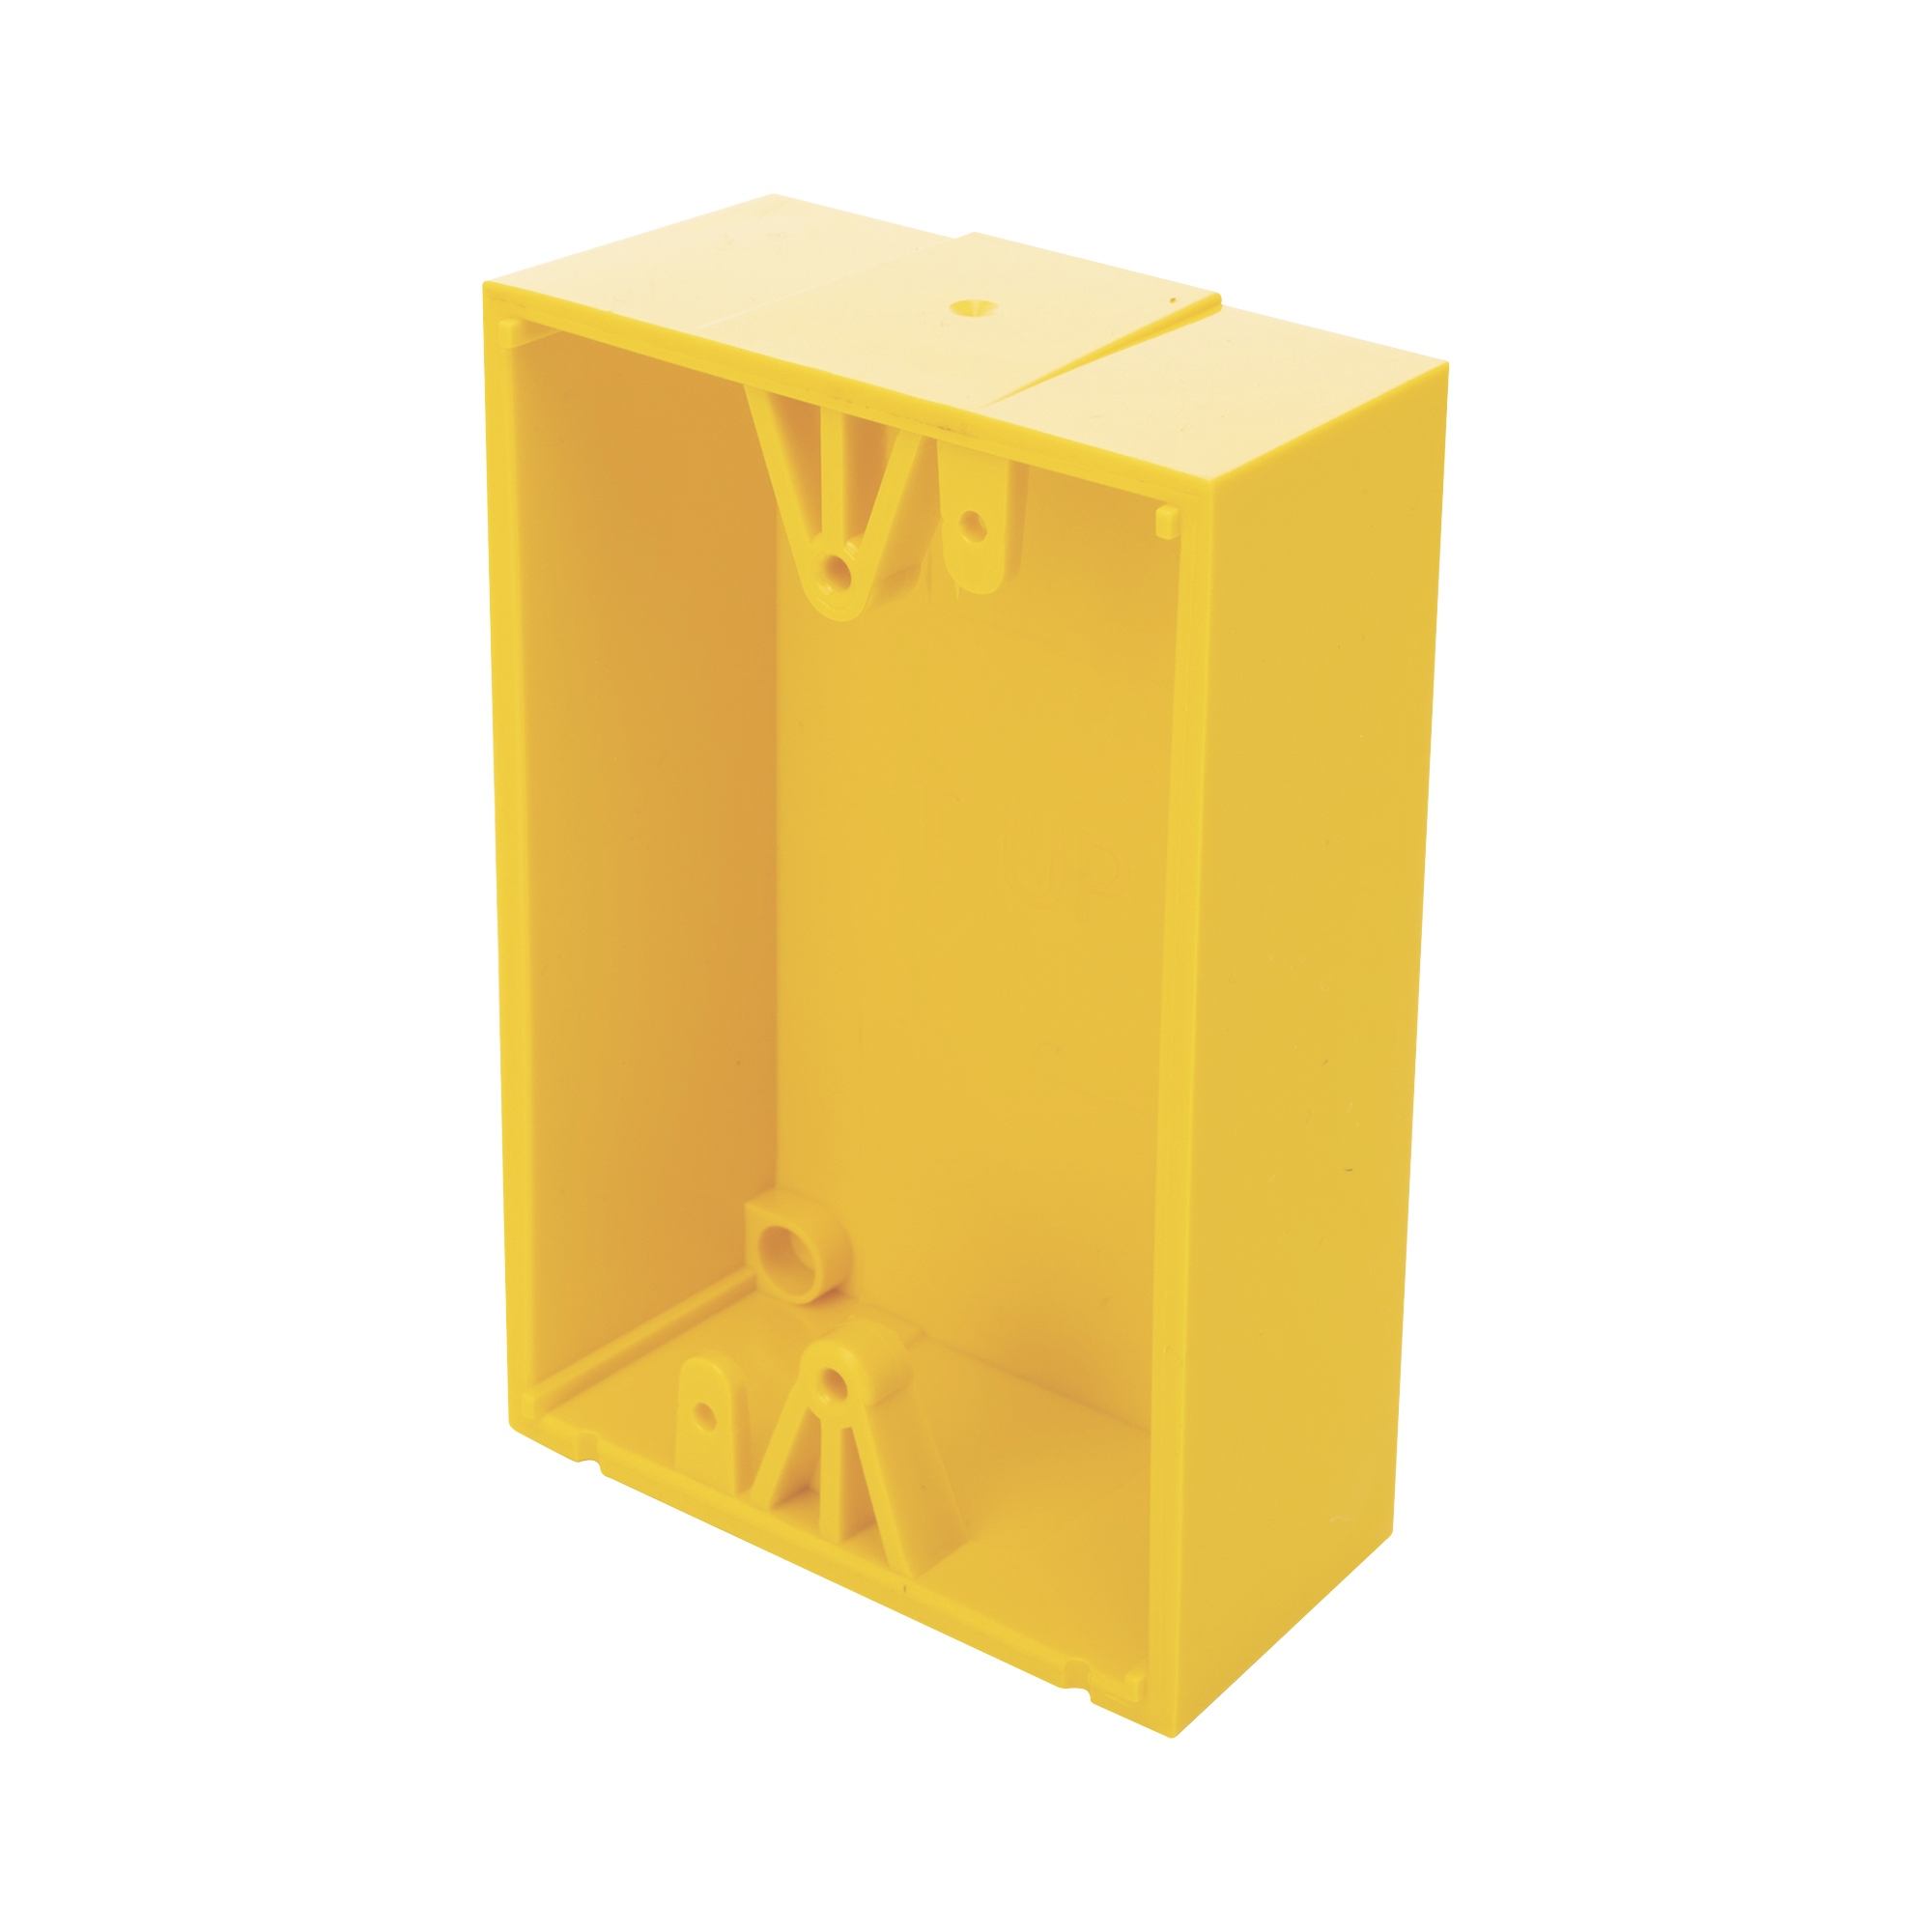 Caja de Montaje Color Amarillo para Botones de Emergencia STI